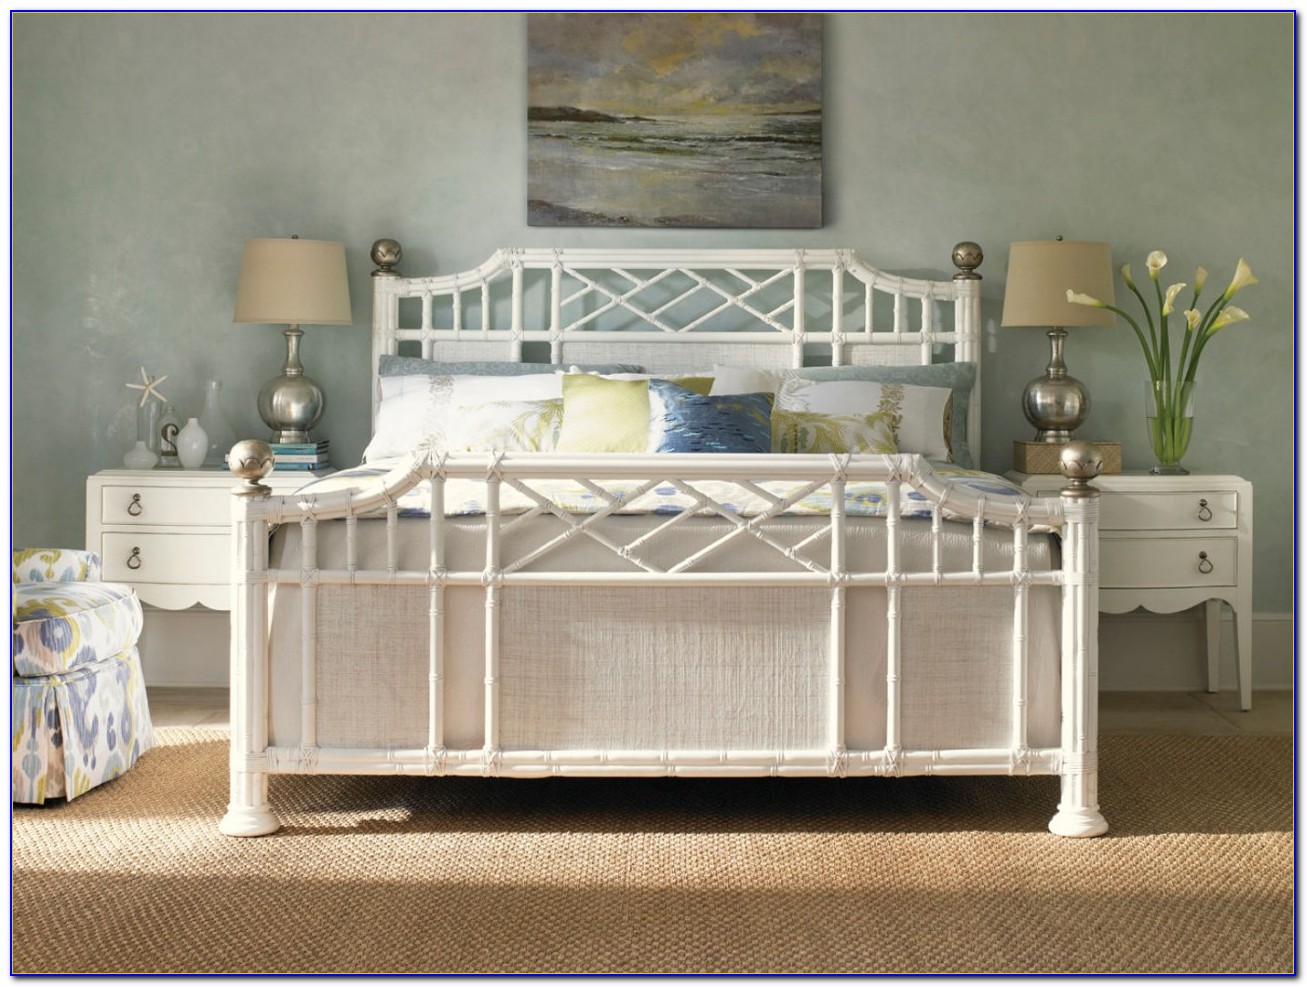 Tommy Bahama Bedroom Furniture Canada - Furniture : Home Design Ideas #rDkW53qzlj